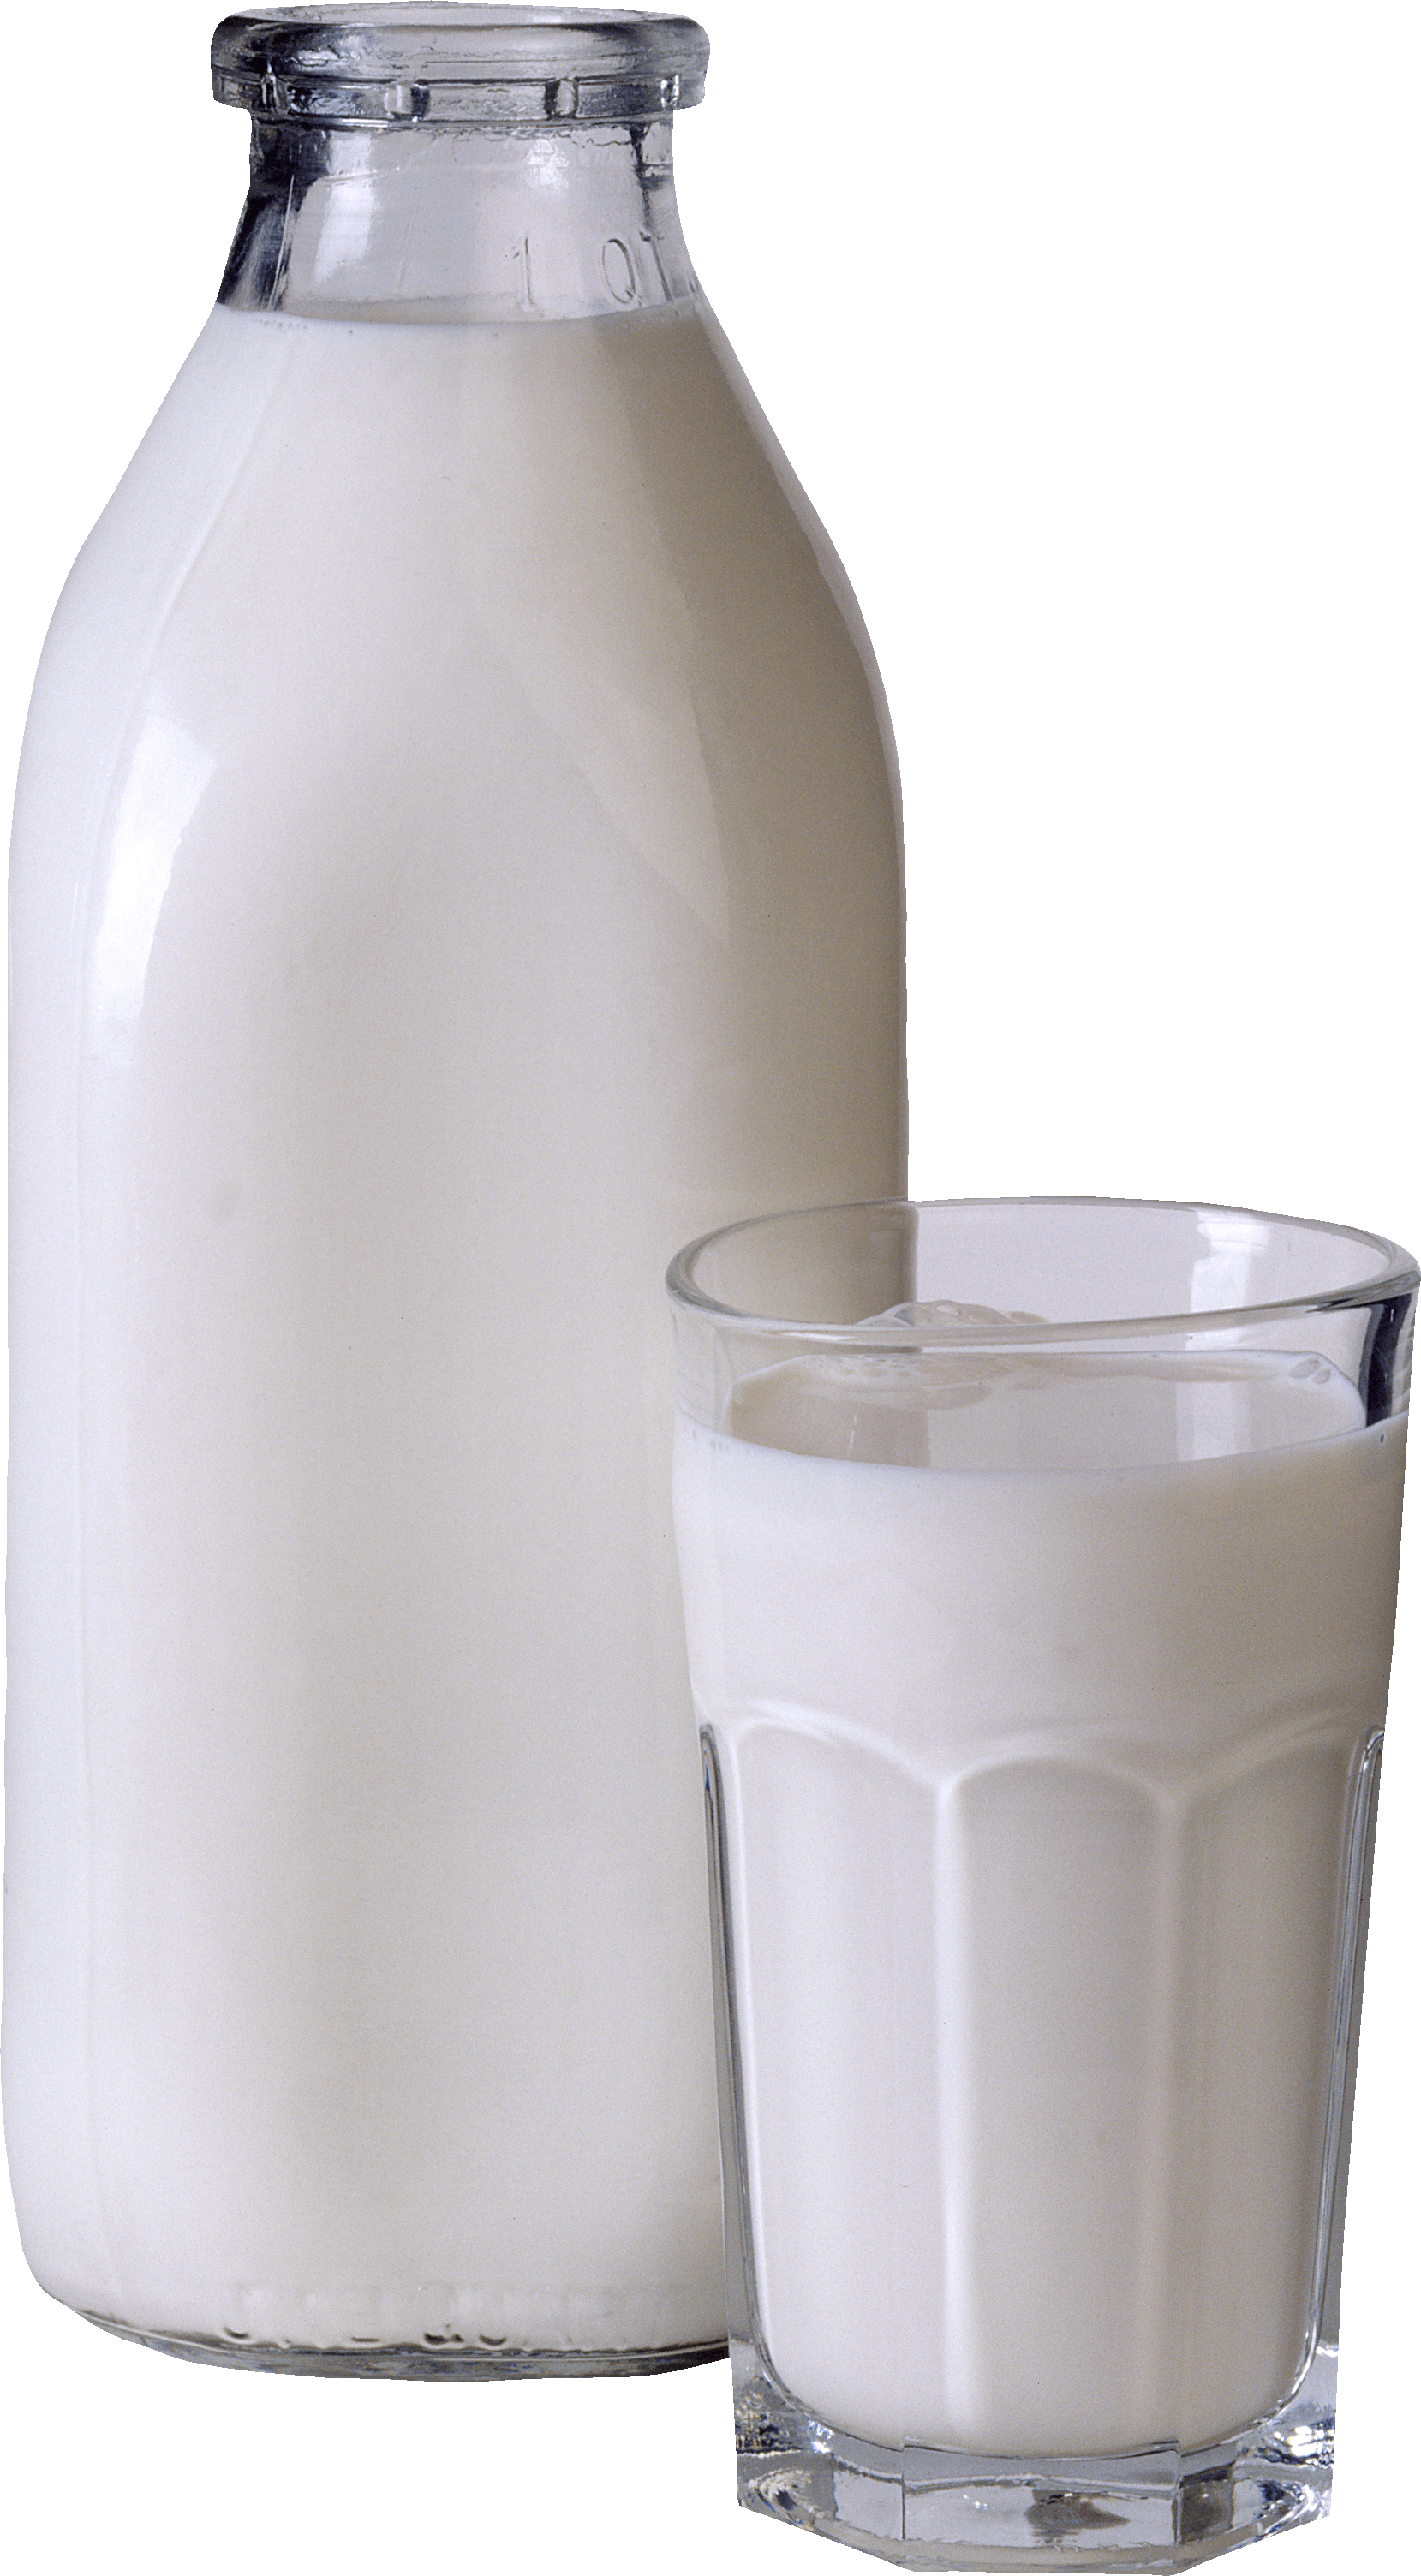 Milk Glass Bottle Png PNG Image